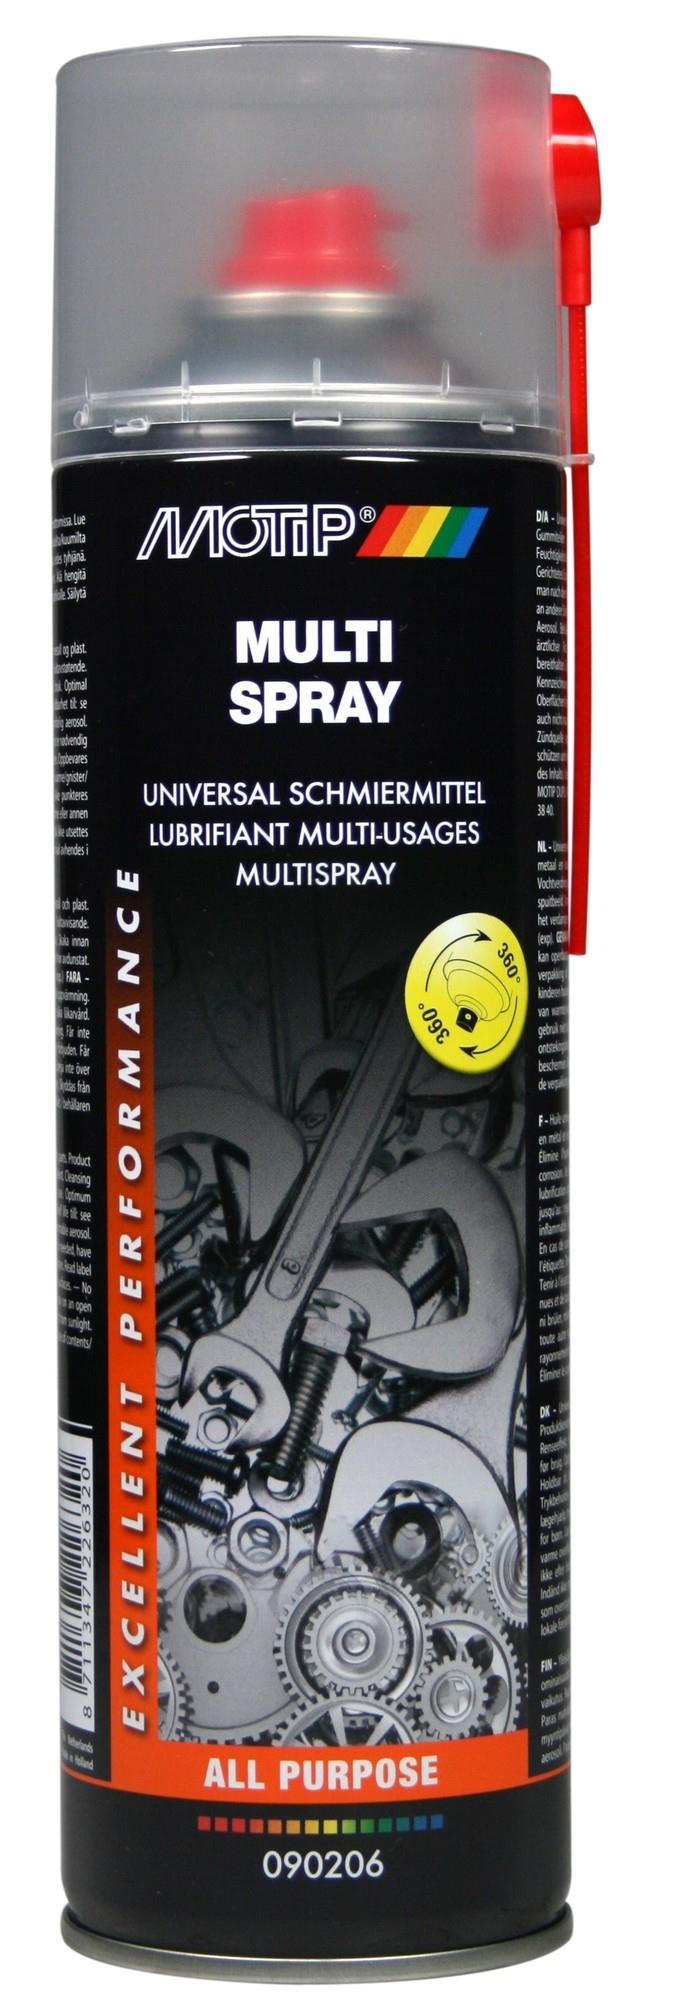 Lubrifiant multi-usages Motip spray 500ml_4298.jpg